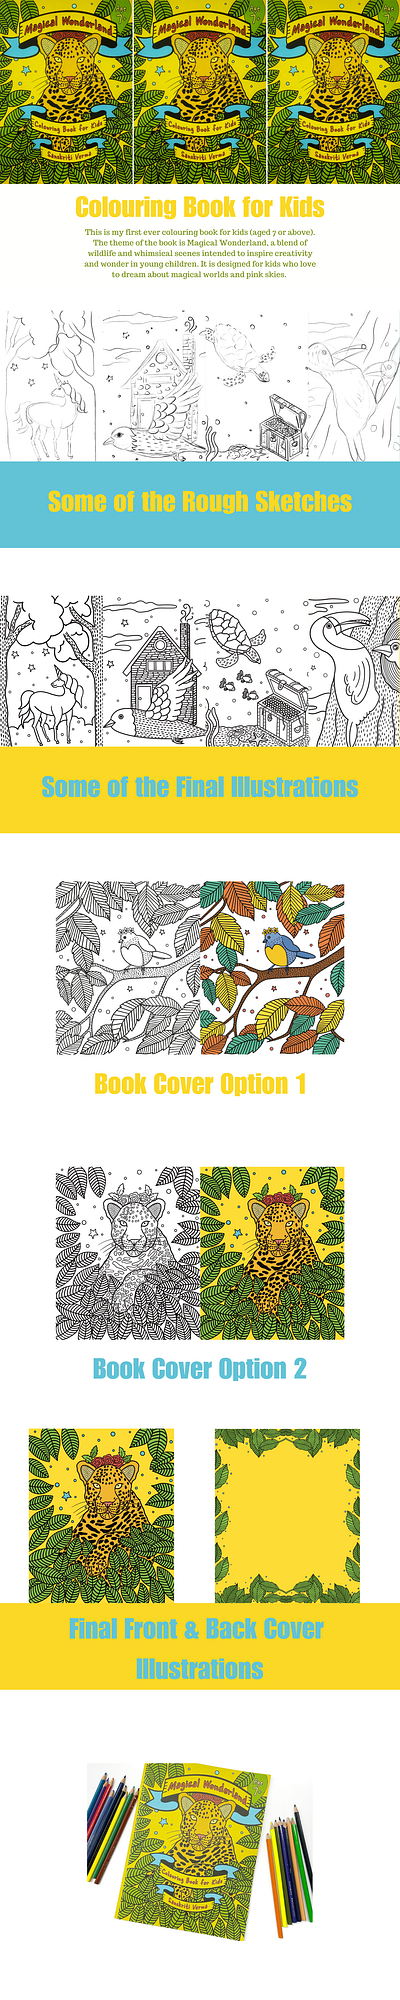 Colouring Book for Kids freelance illustrator illustration illustrator kids book illustration whimsical illustrations